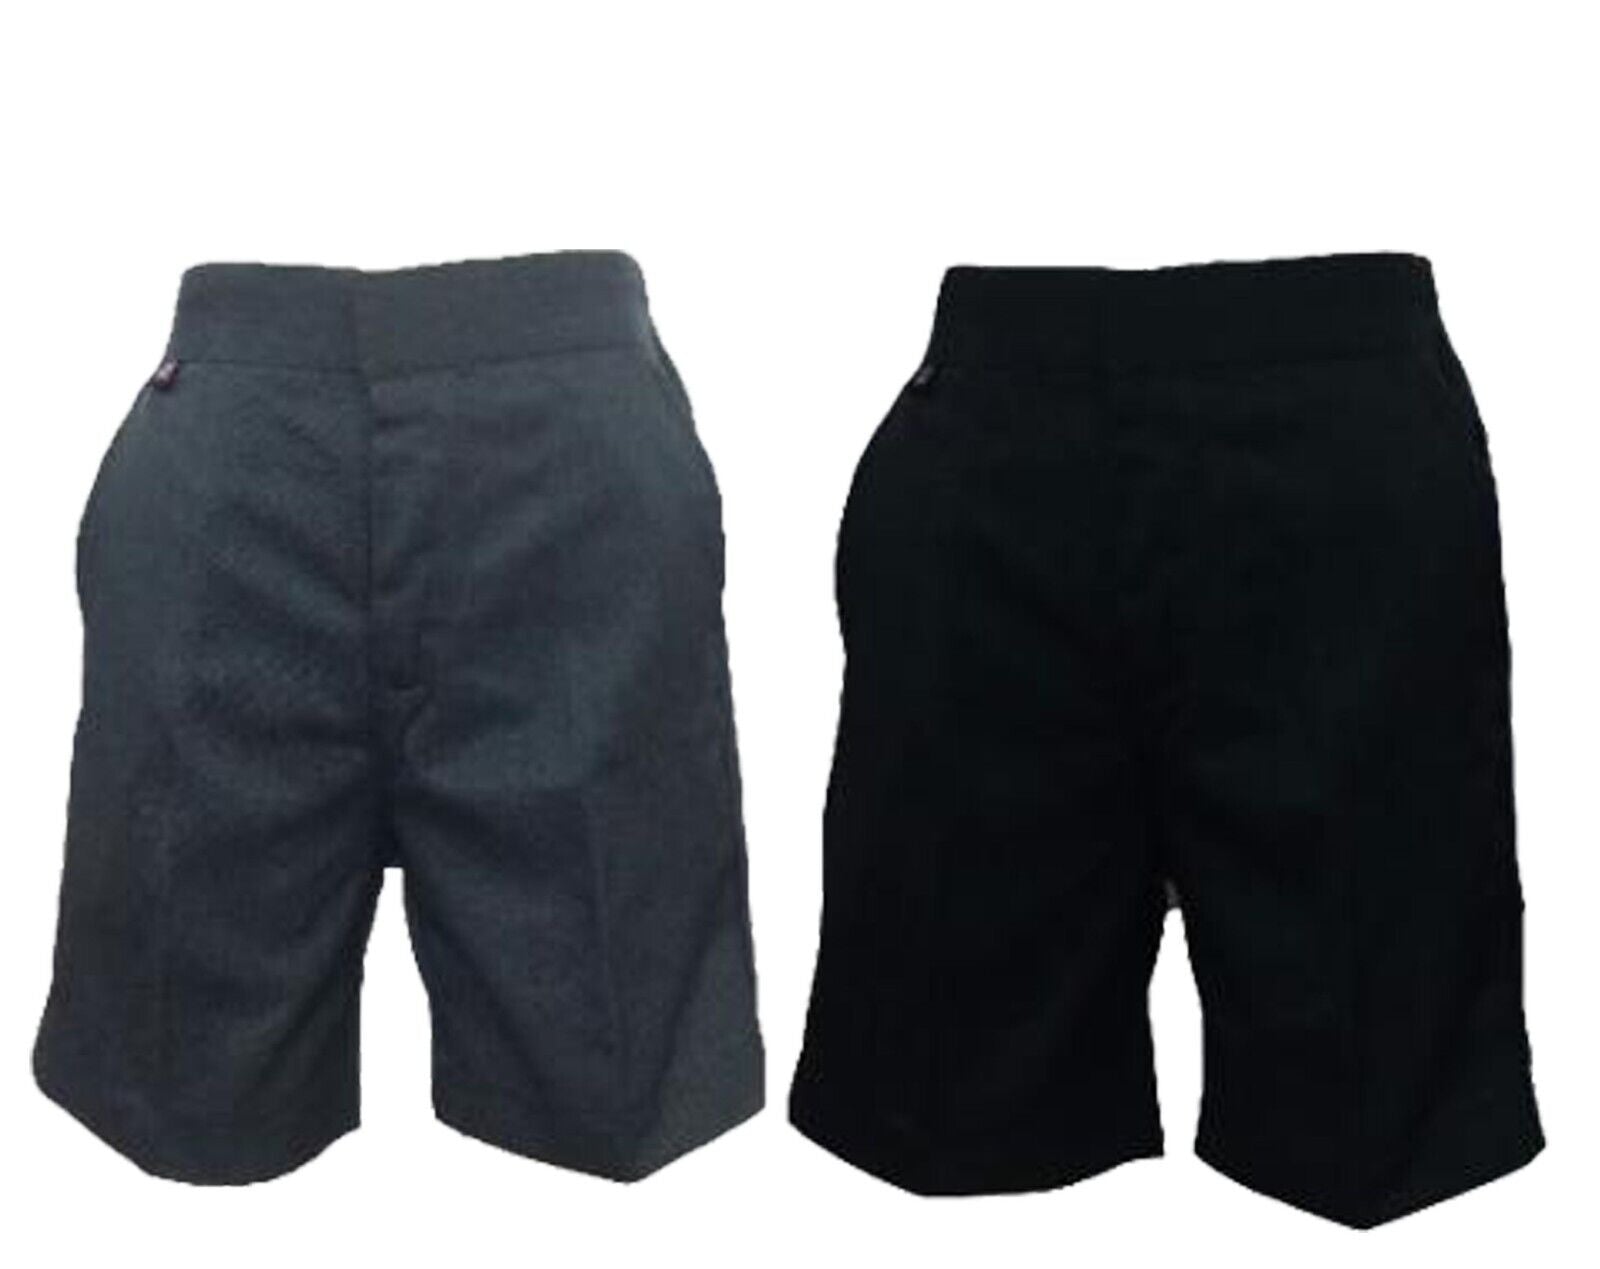 New Boys School Shorts Half Elasticated Kids Uniform Pull Up Shorts